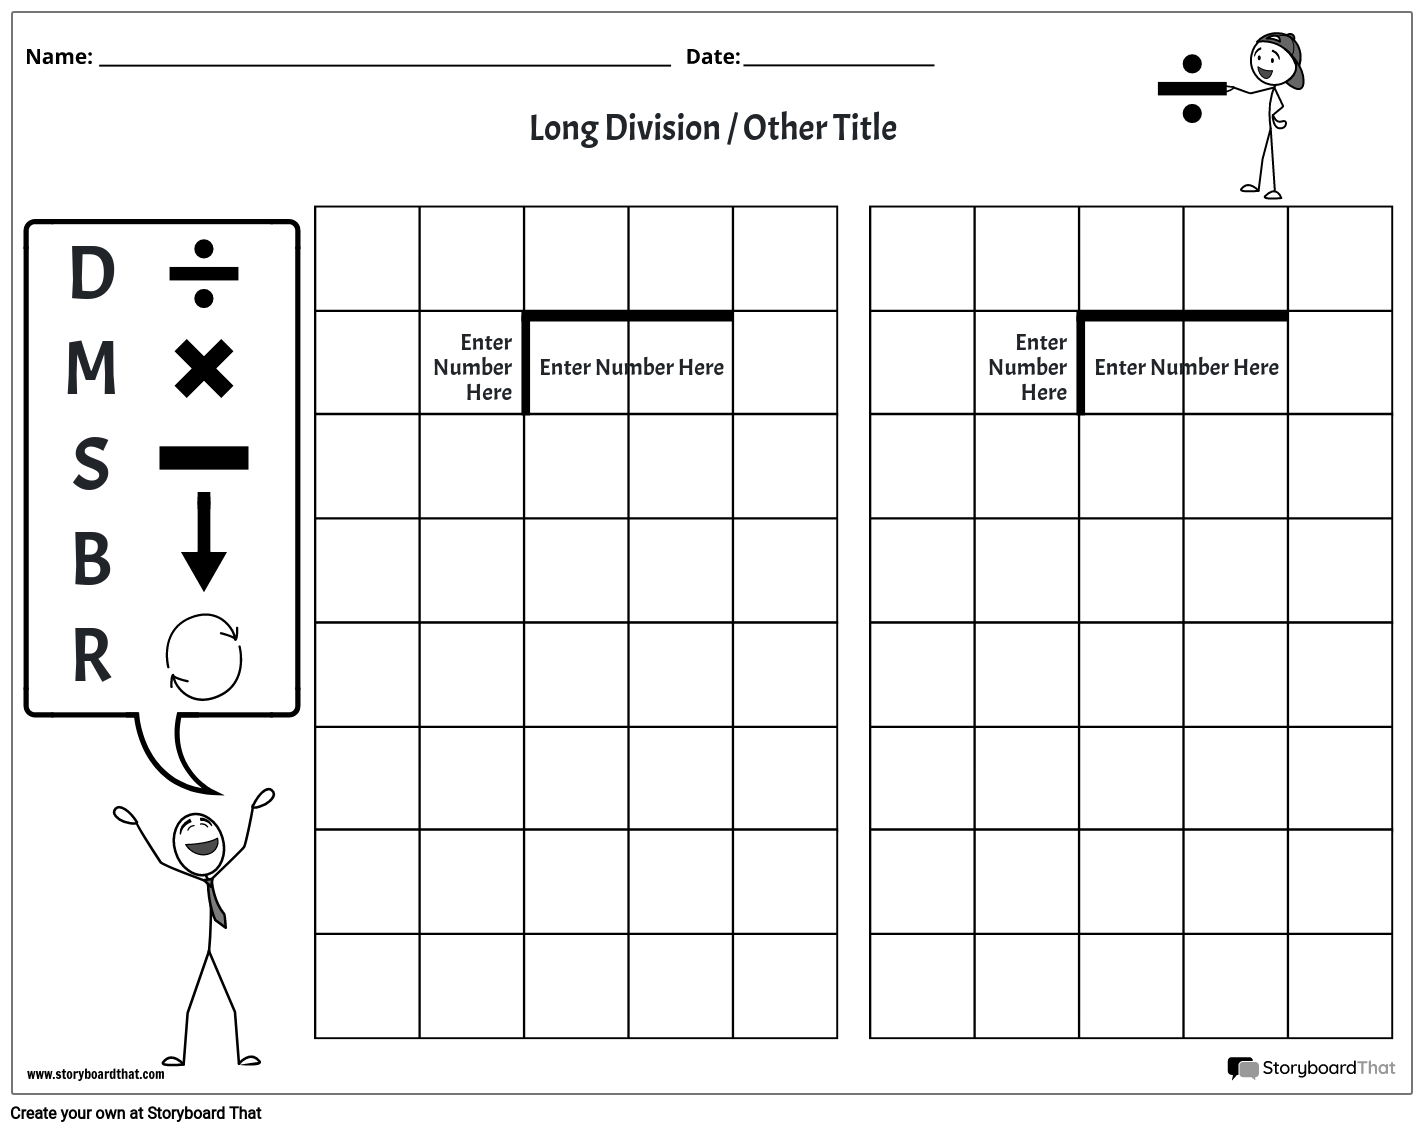 Long Division 1 Storyboard Per Worksheet templates